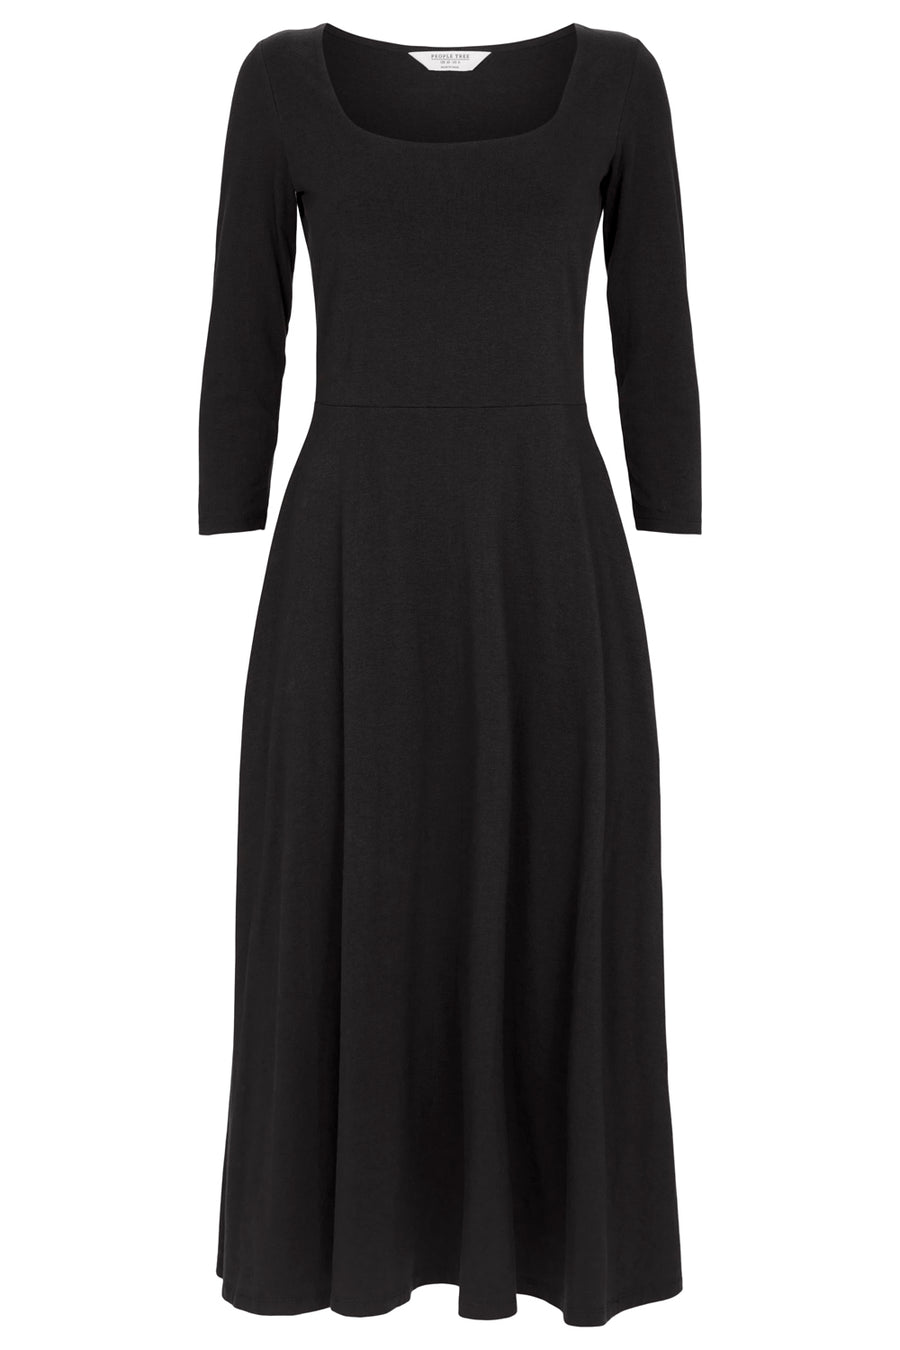 Valencia Dress in Black, XS